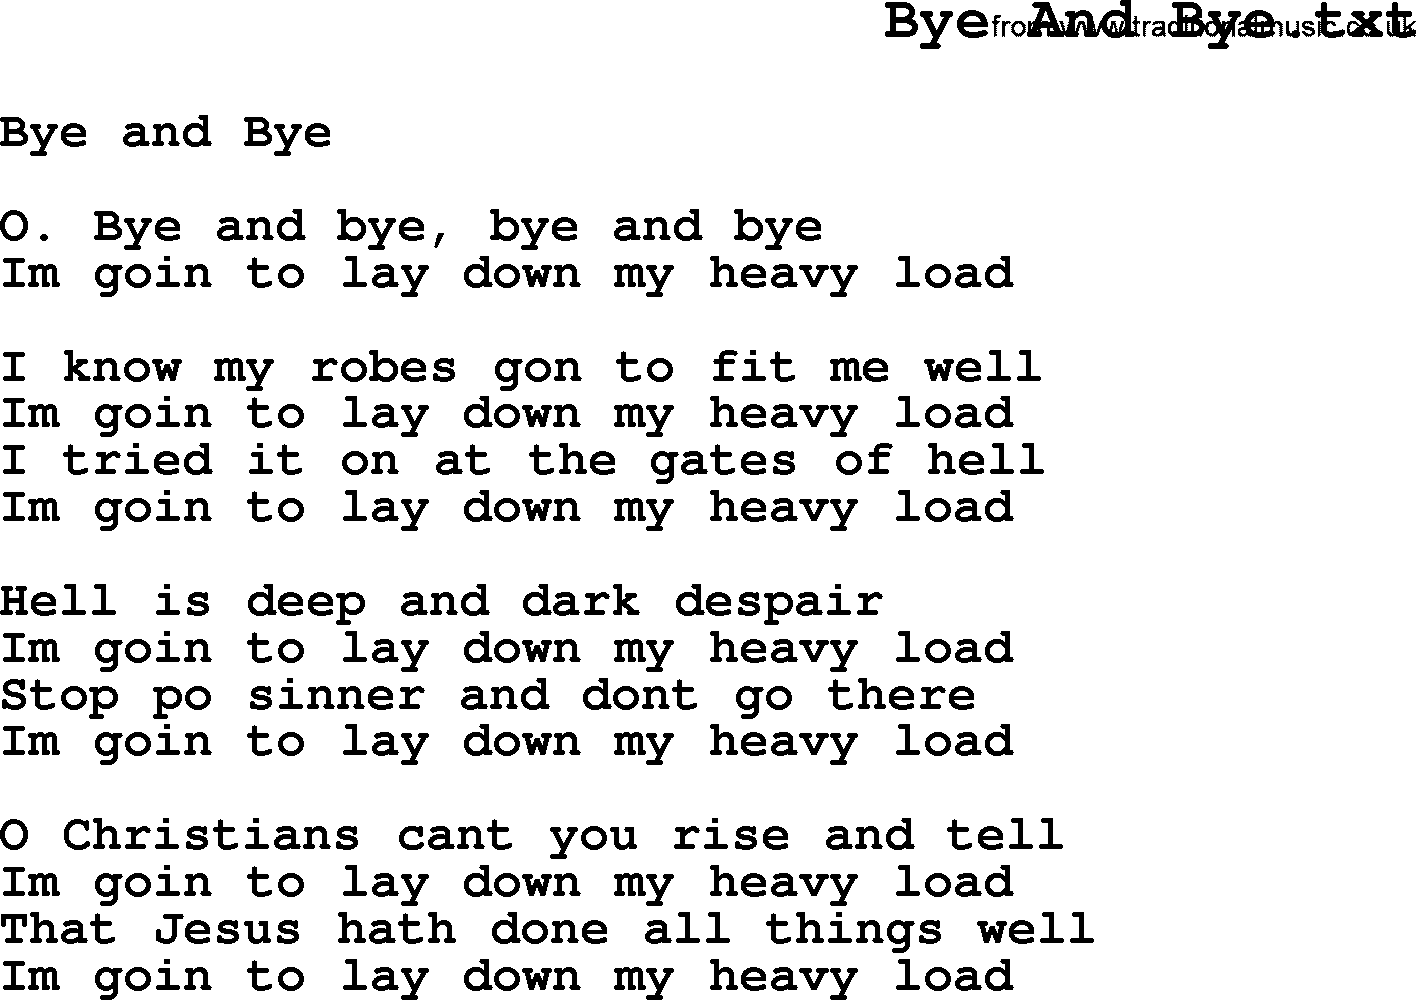 Negro Spiritual Song Lyrics for Bye And Bye